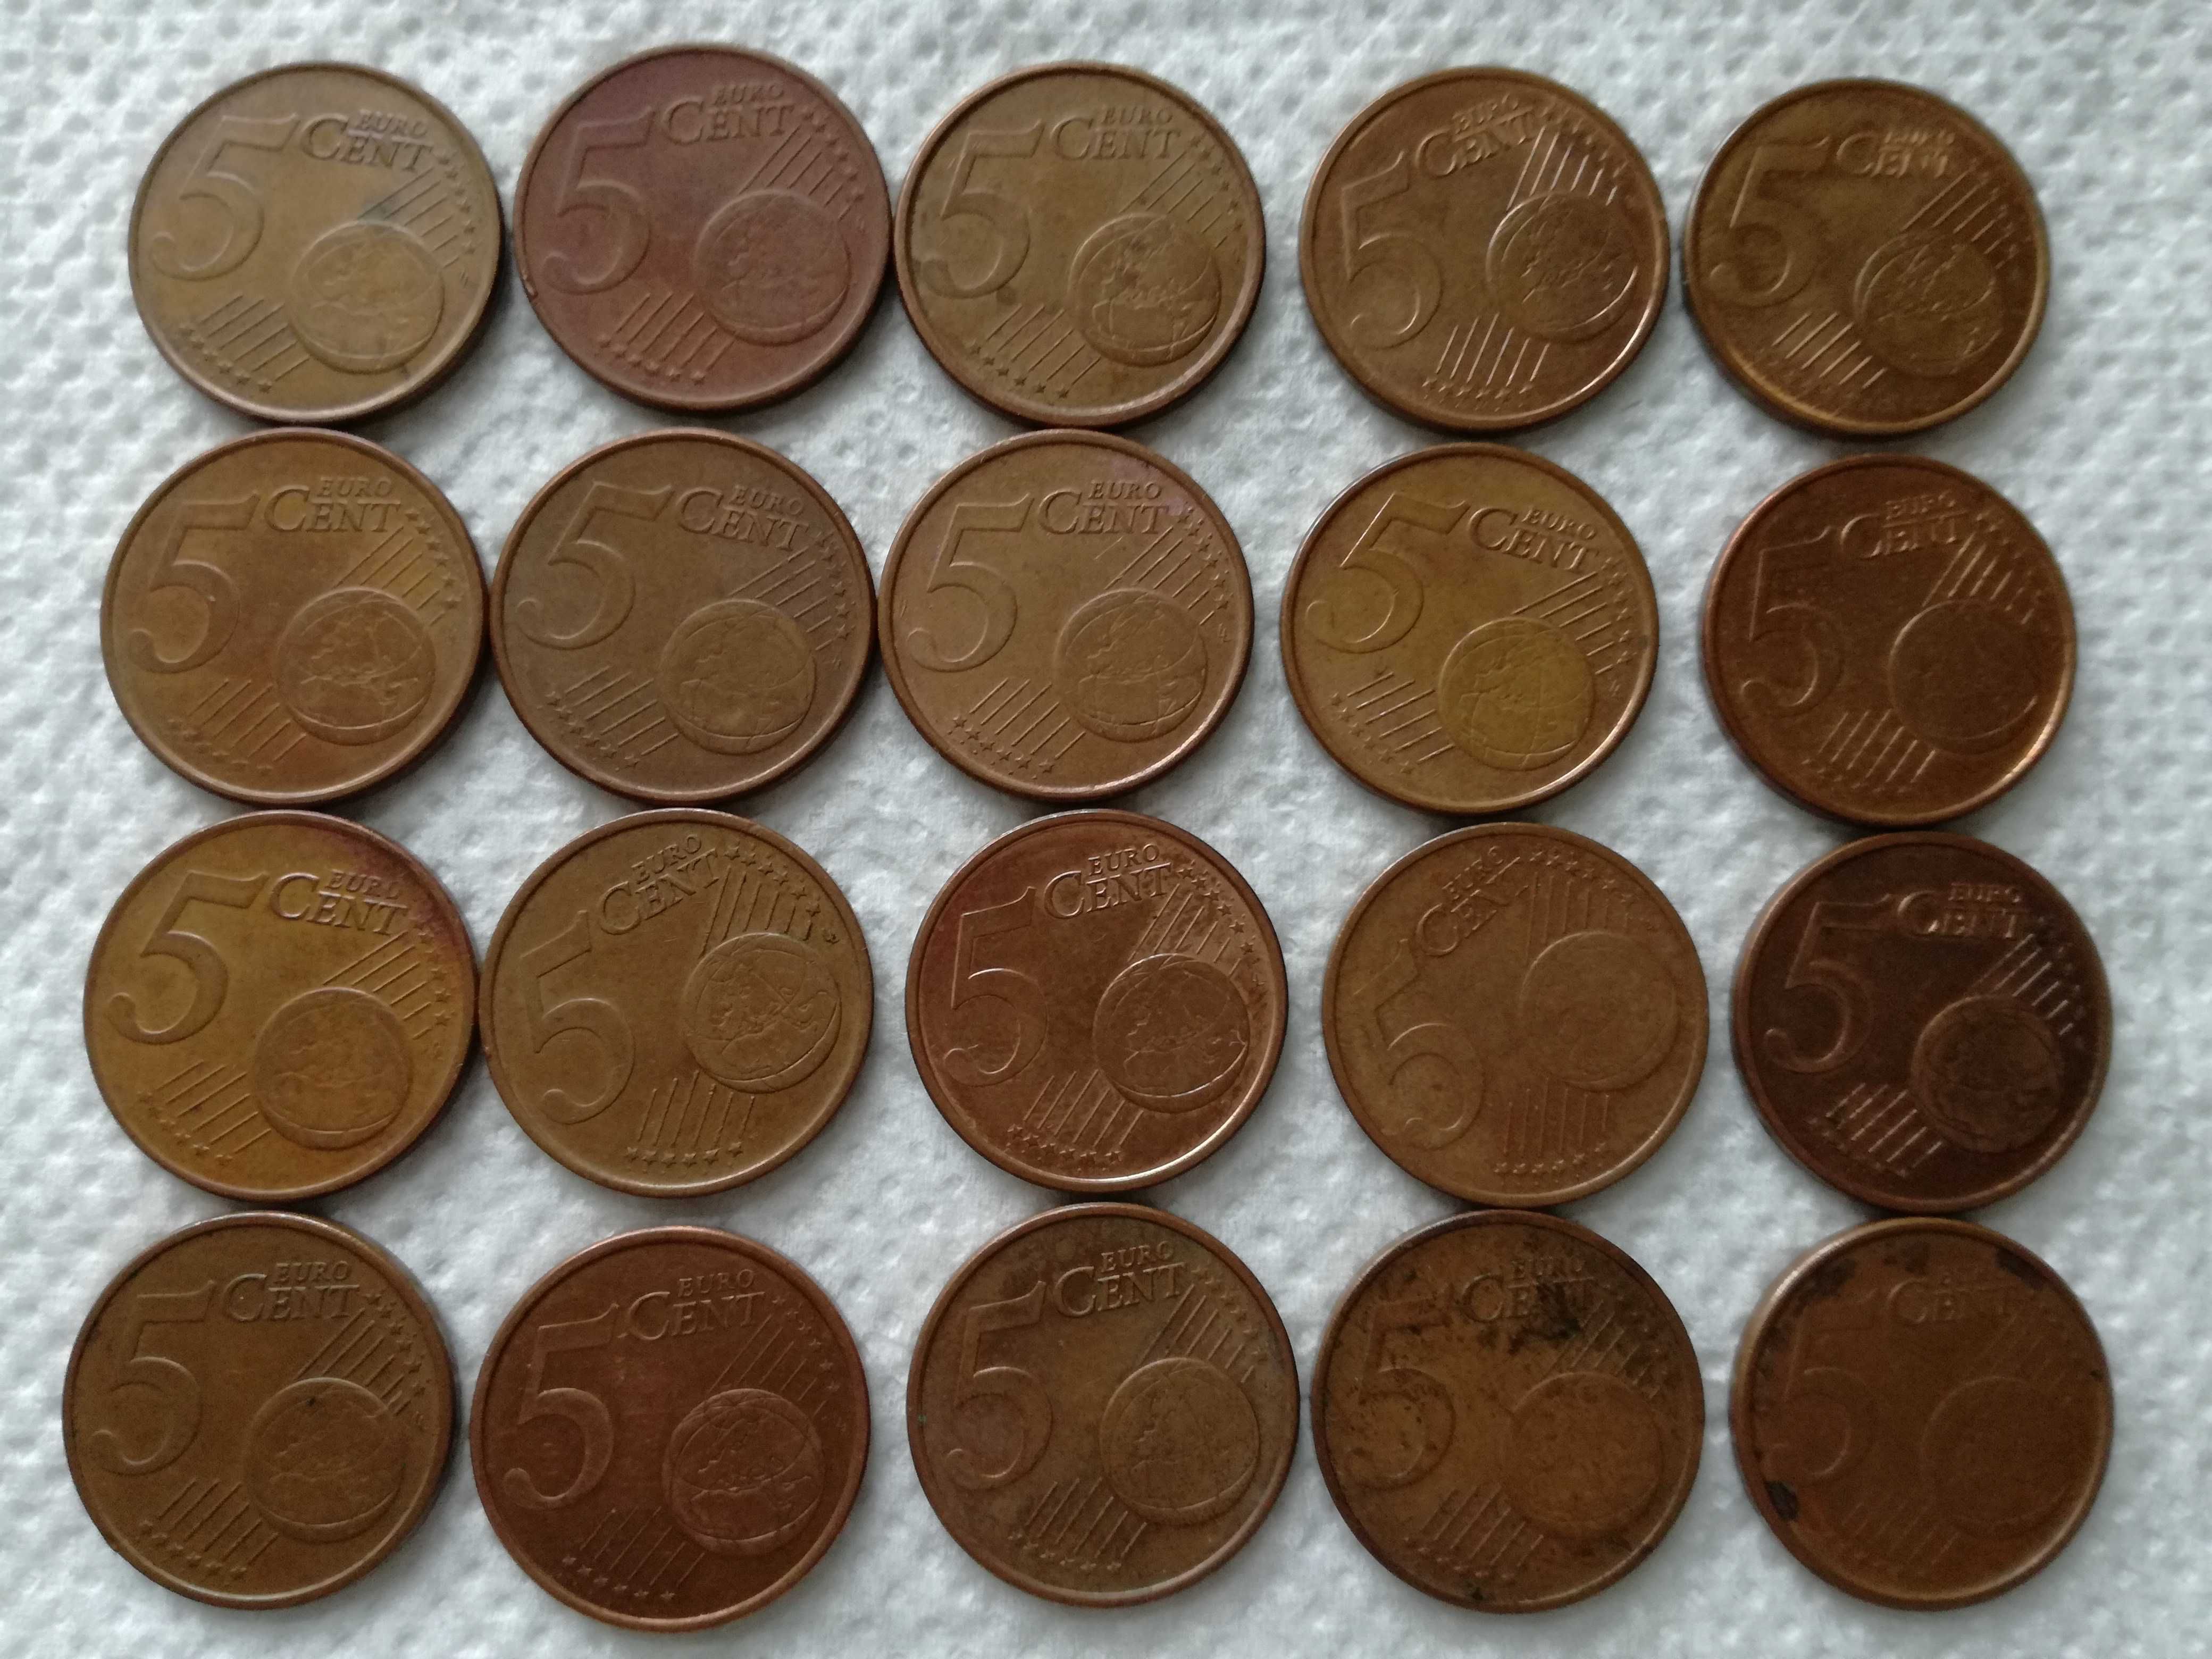 Vând monede rare de 5 euro centi de colectie